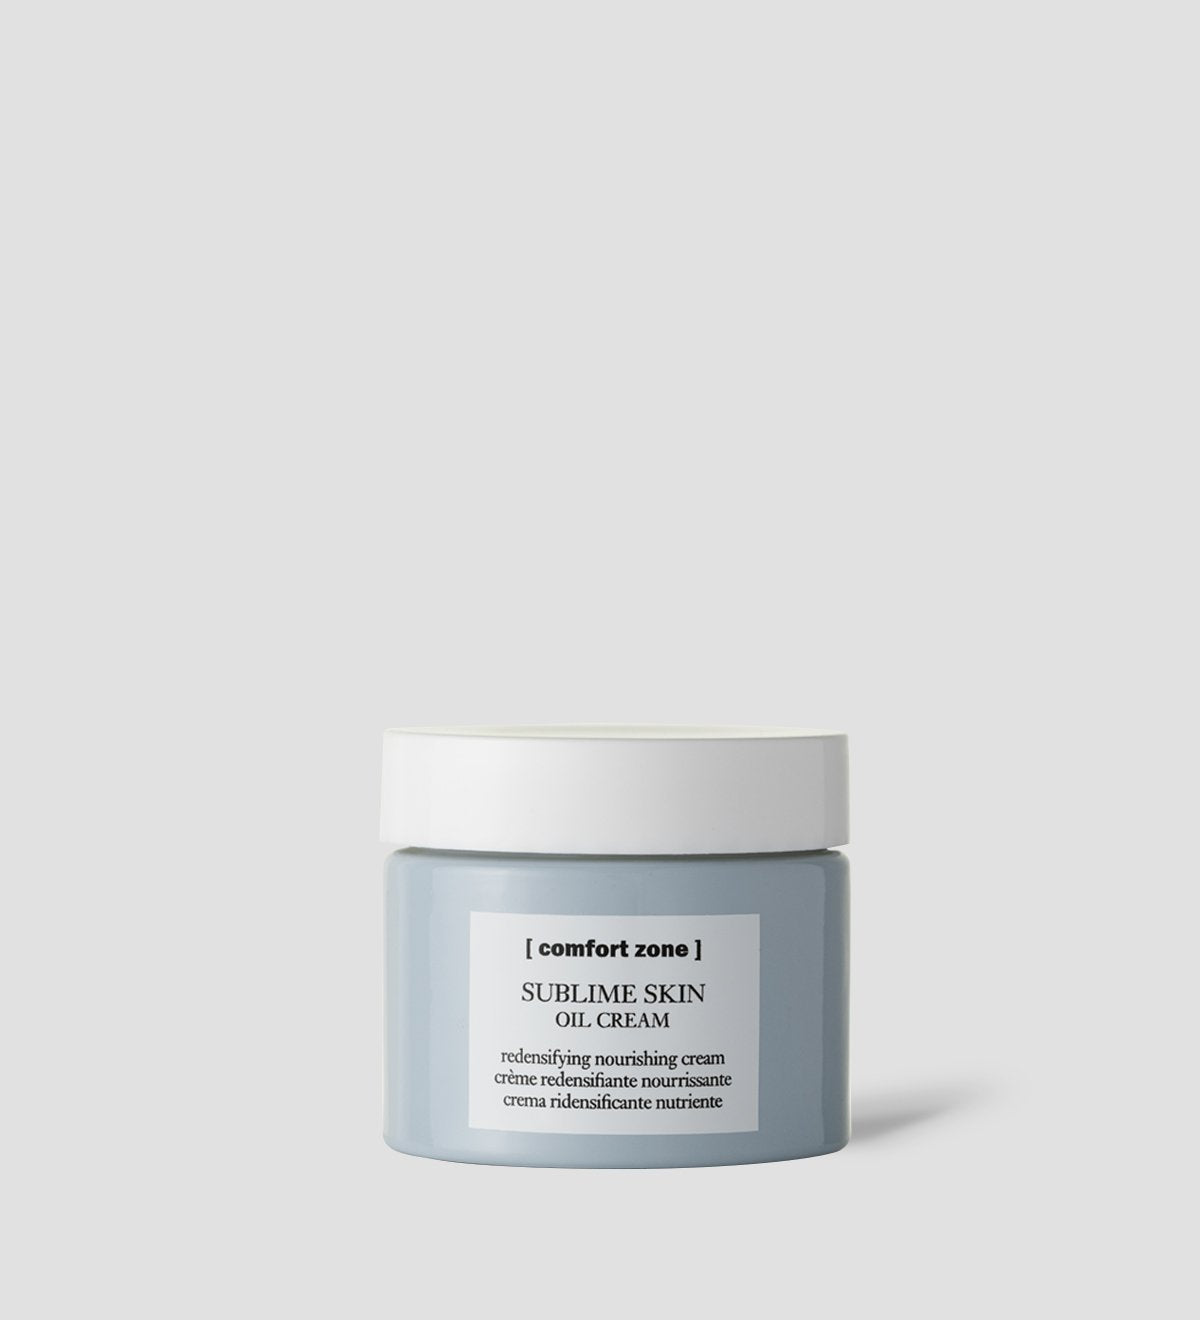 Sublime Skin Oil Cream 60ml Comfort Zone